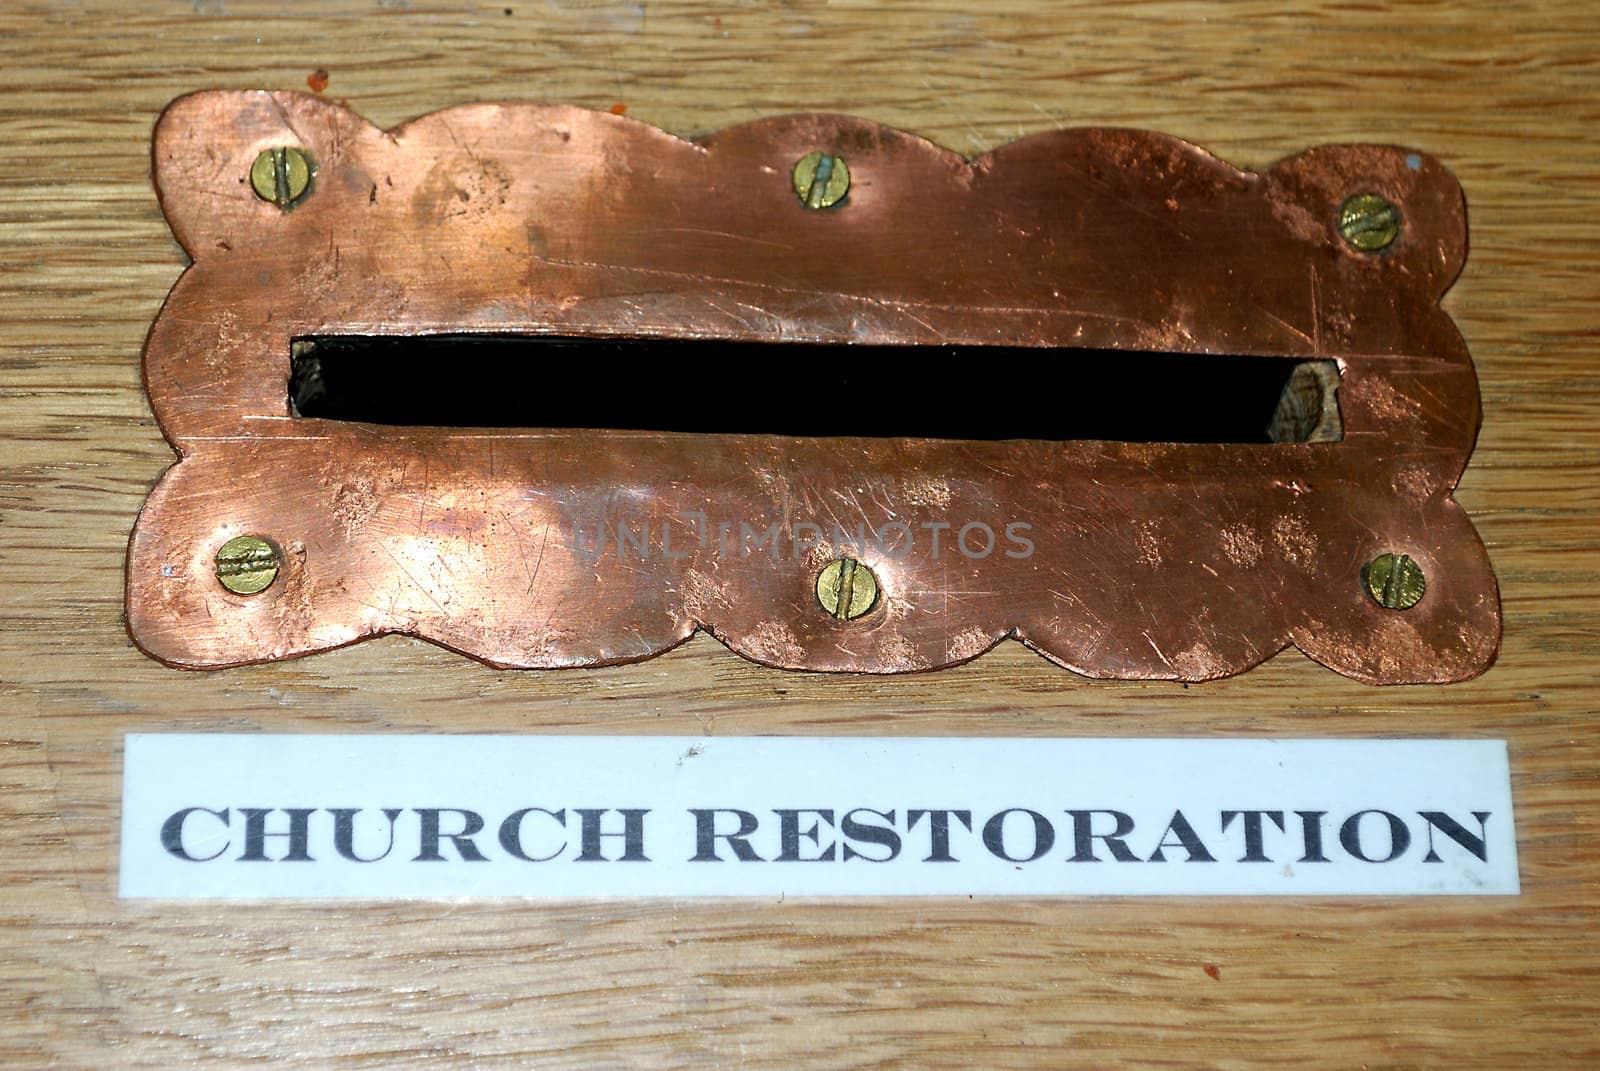 Church restoration collection box